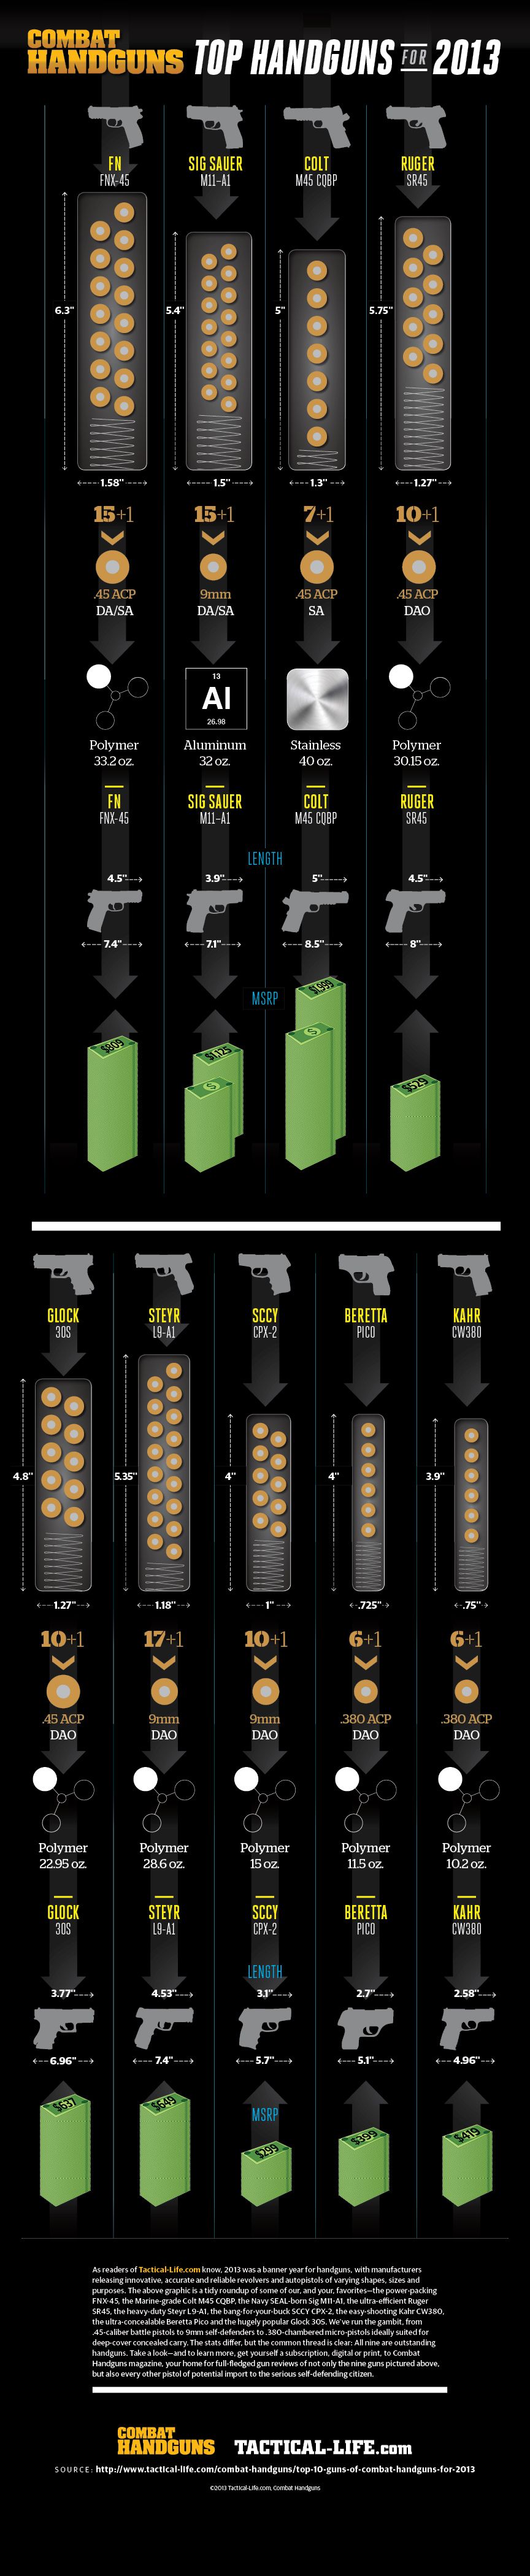 Combat Handguns’ Top Handguns of 2013 Infographic